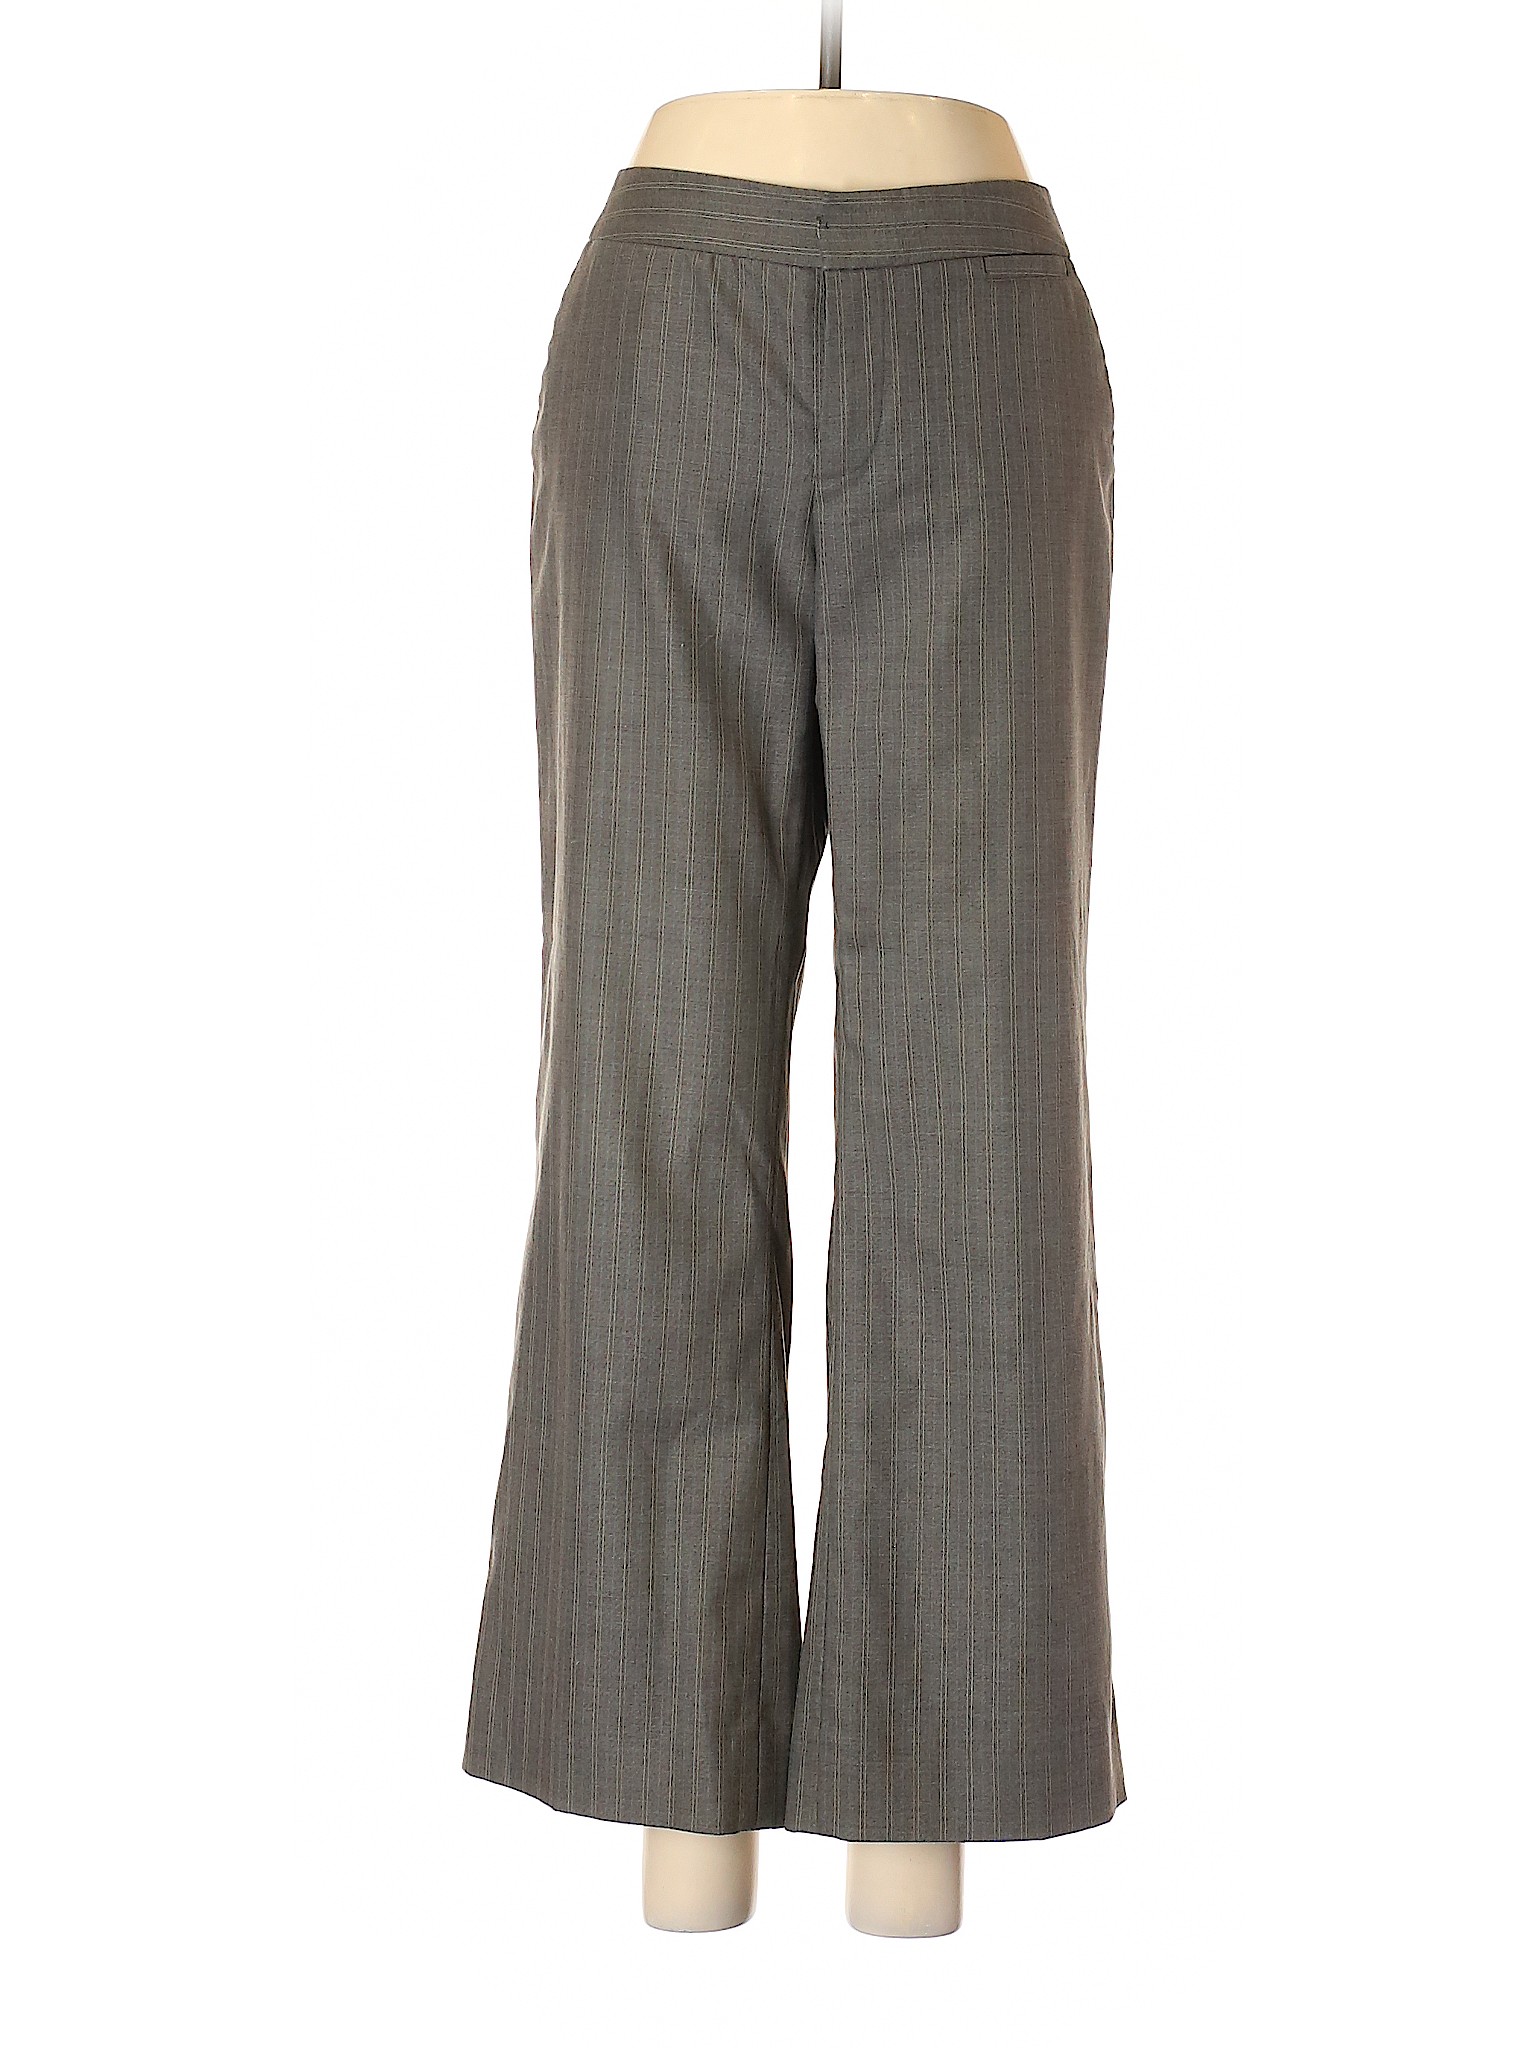 Banana Republic Factory Store Women Brown Dress Pants 6 | eBay